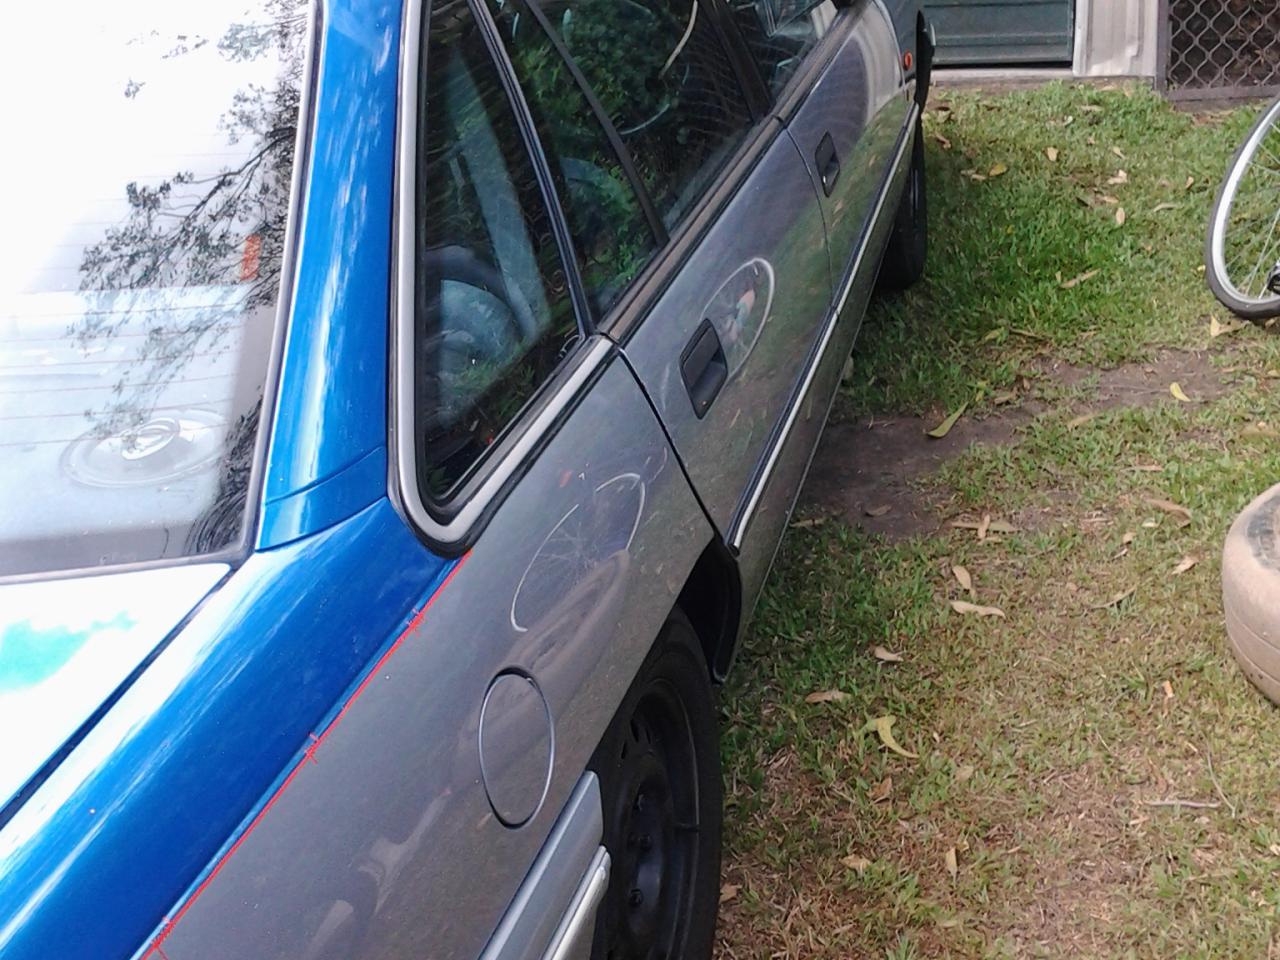 1993 Holden Commodore Executive Vpii